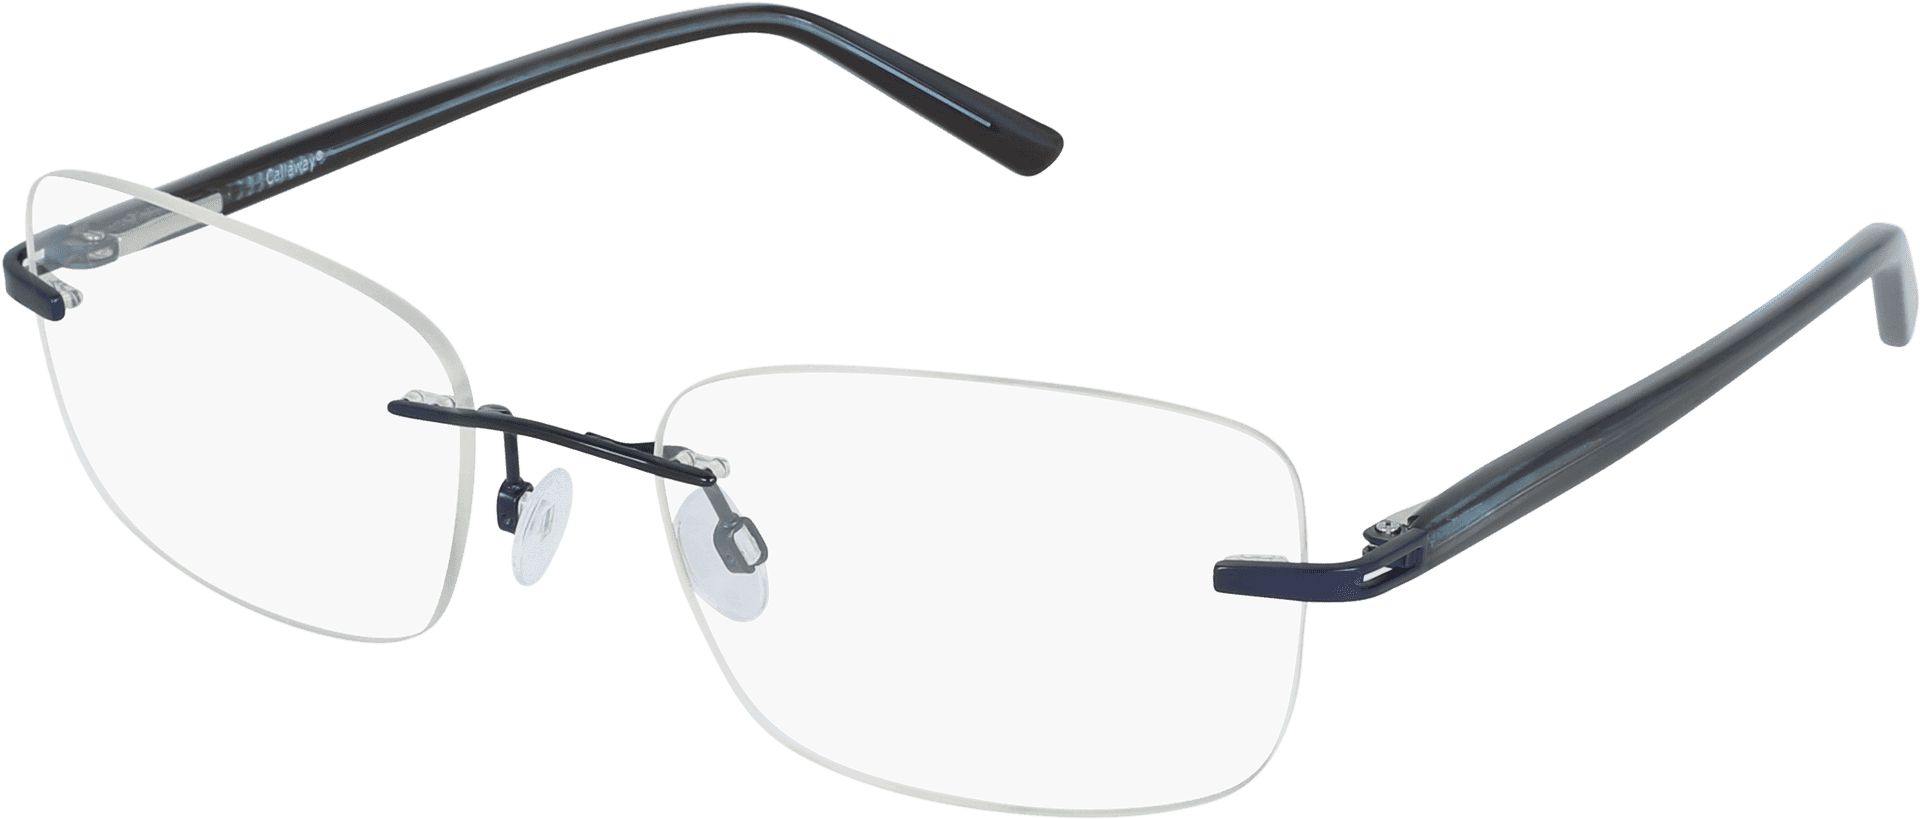 Modern Rimless Eyeglasses PNG image